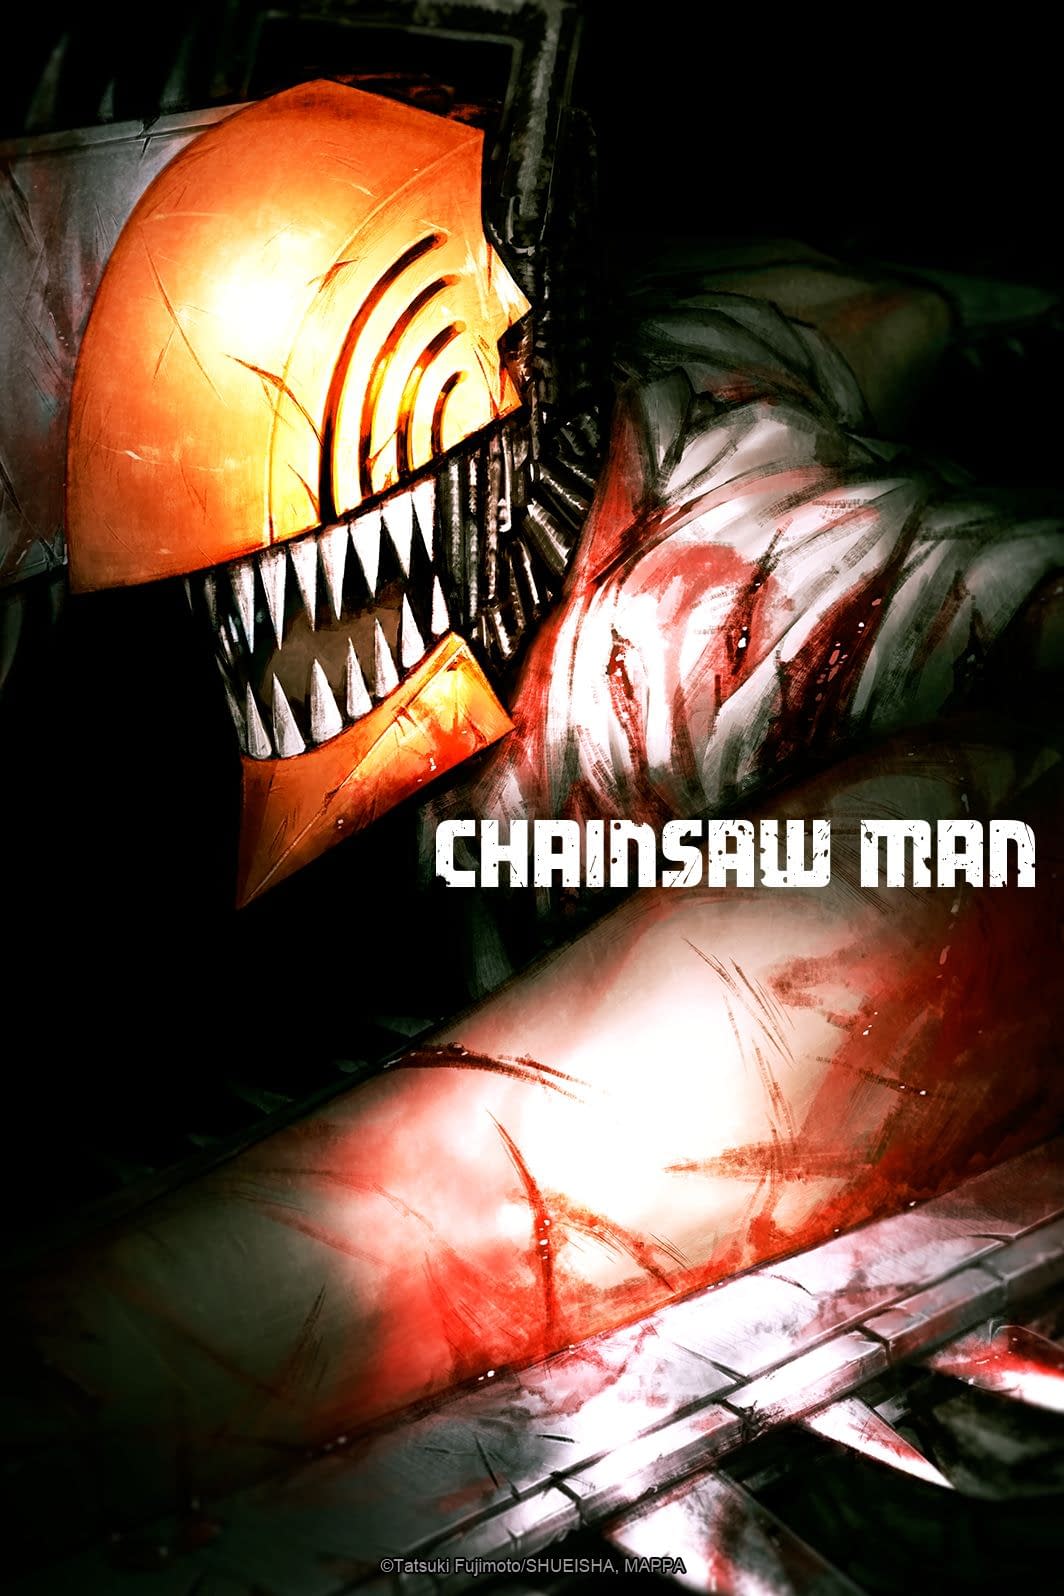 Chainsaw Man season 2 hype brews as studio teases special announcement